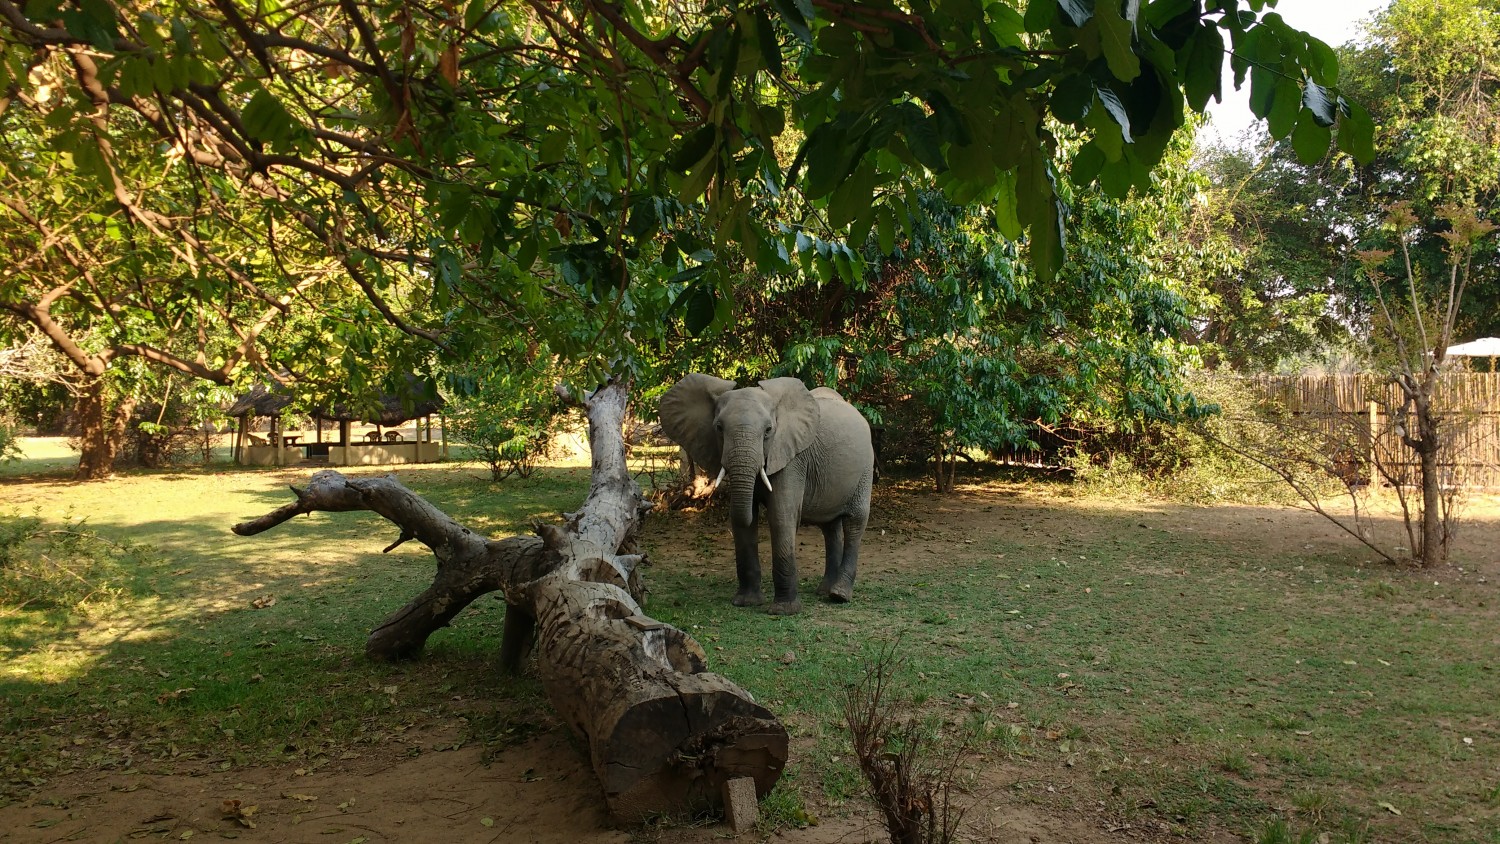 The elephants found us!